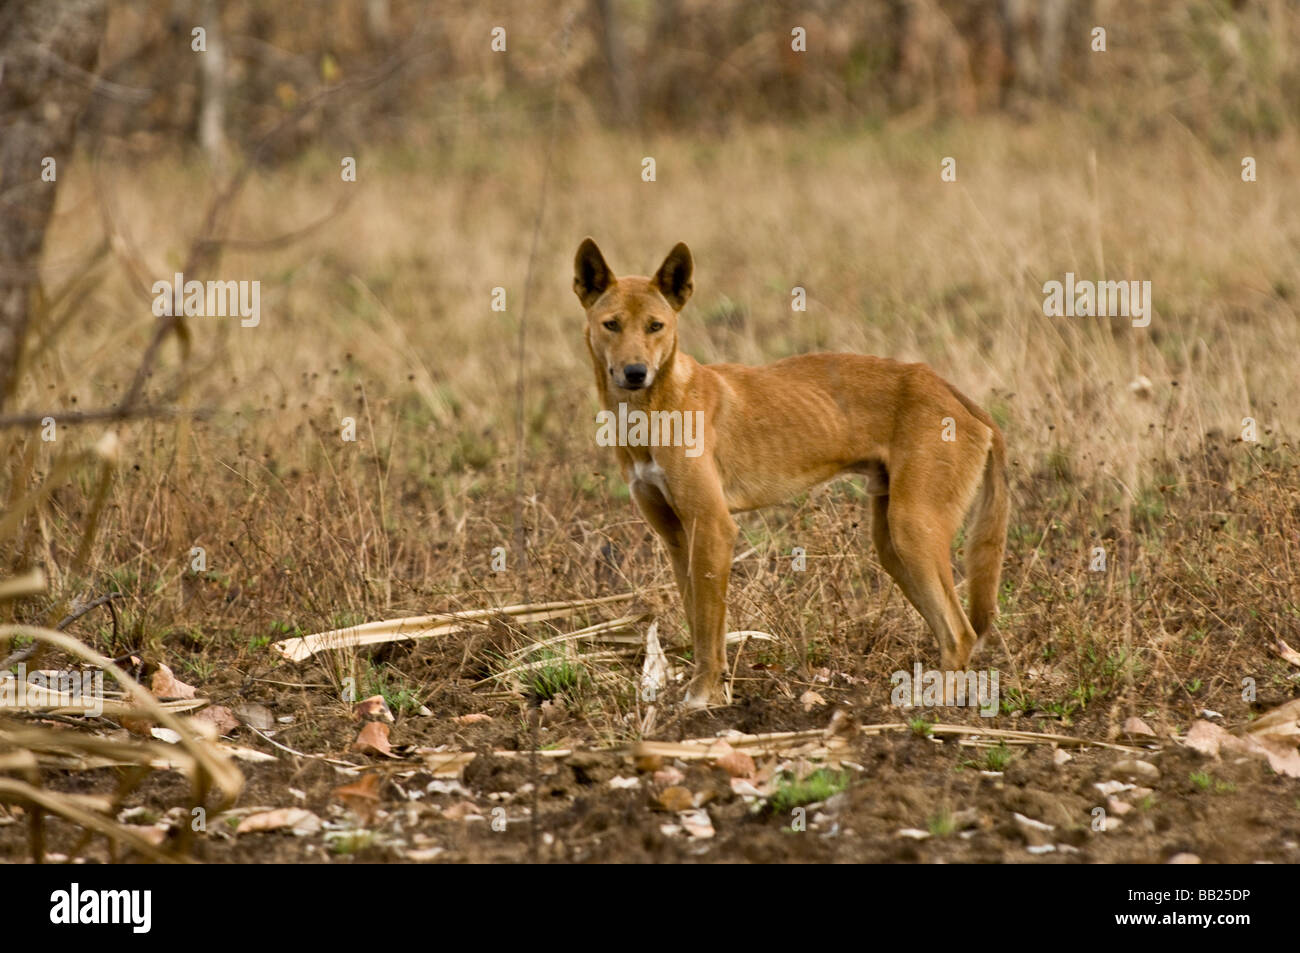 Dingo standing in the wilderness area in Australia Stock Photo